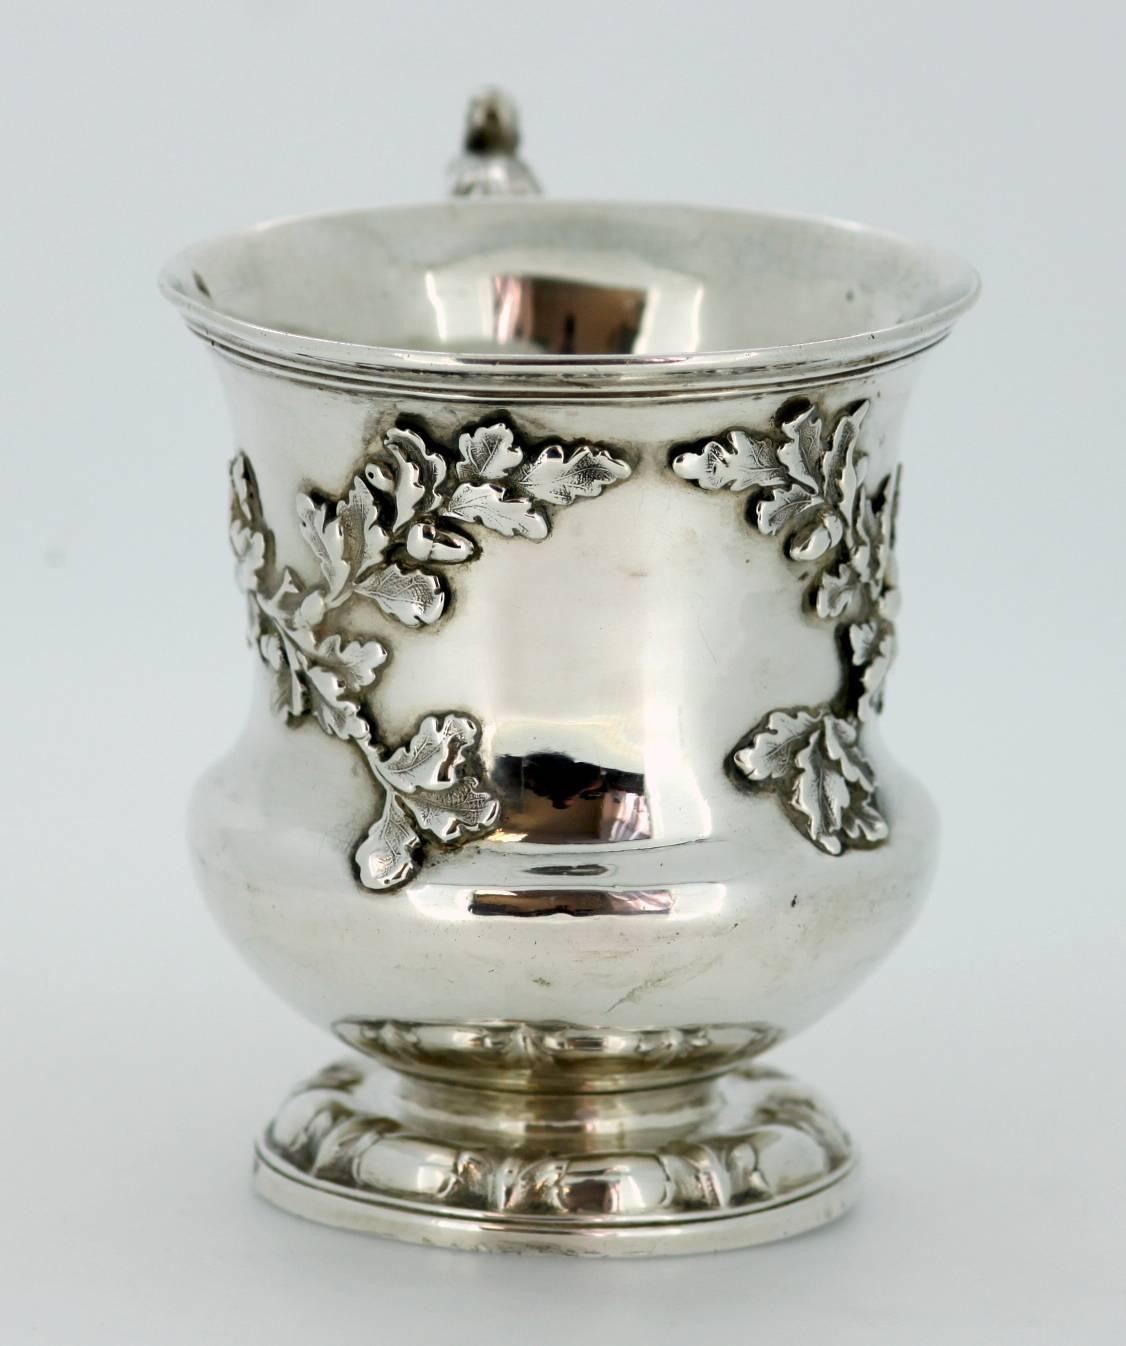 Great Britain (UK) Solid Silver Cup, London, 1832 by Edward, Edward Junior, John & William Barnard